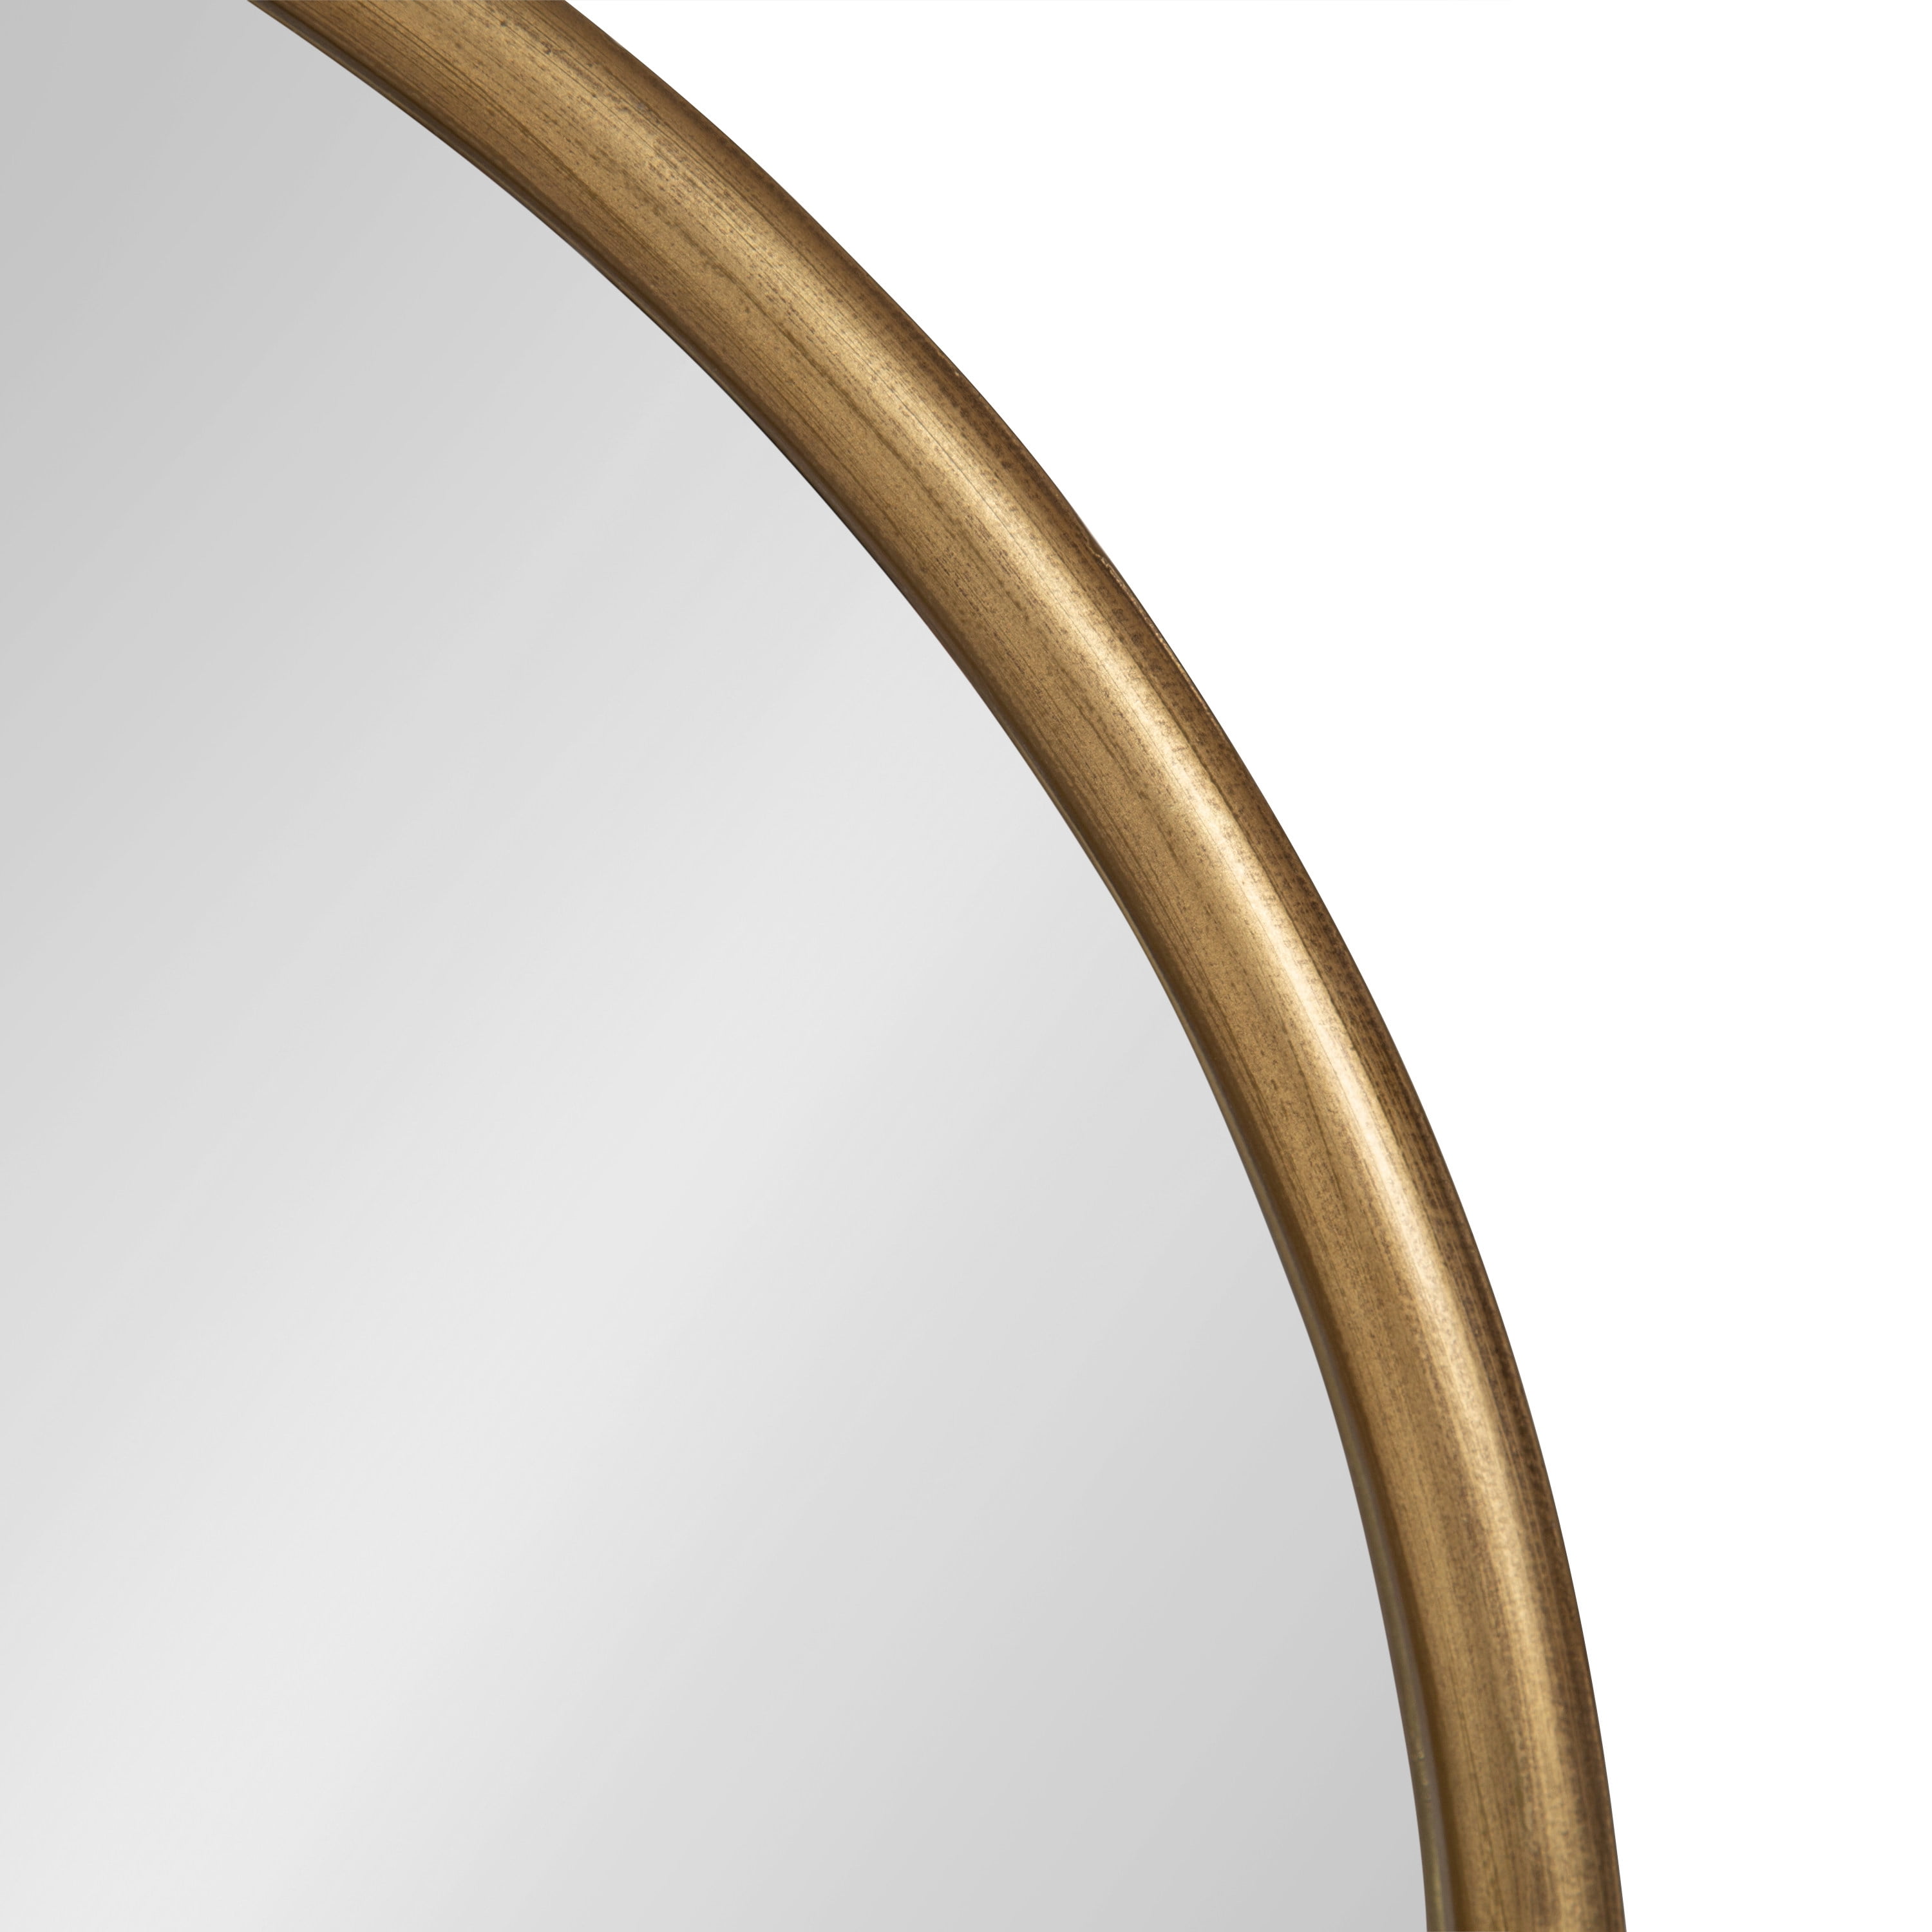 Cooper Classics Adeline Gold 39 x 38-Inch Wall Mirror 42082